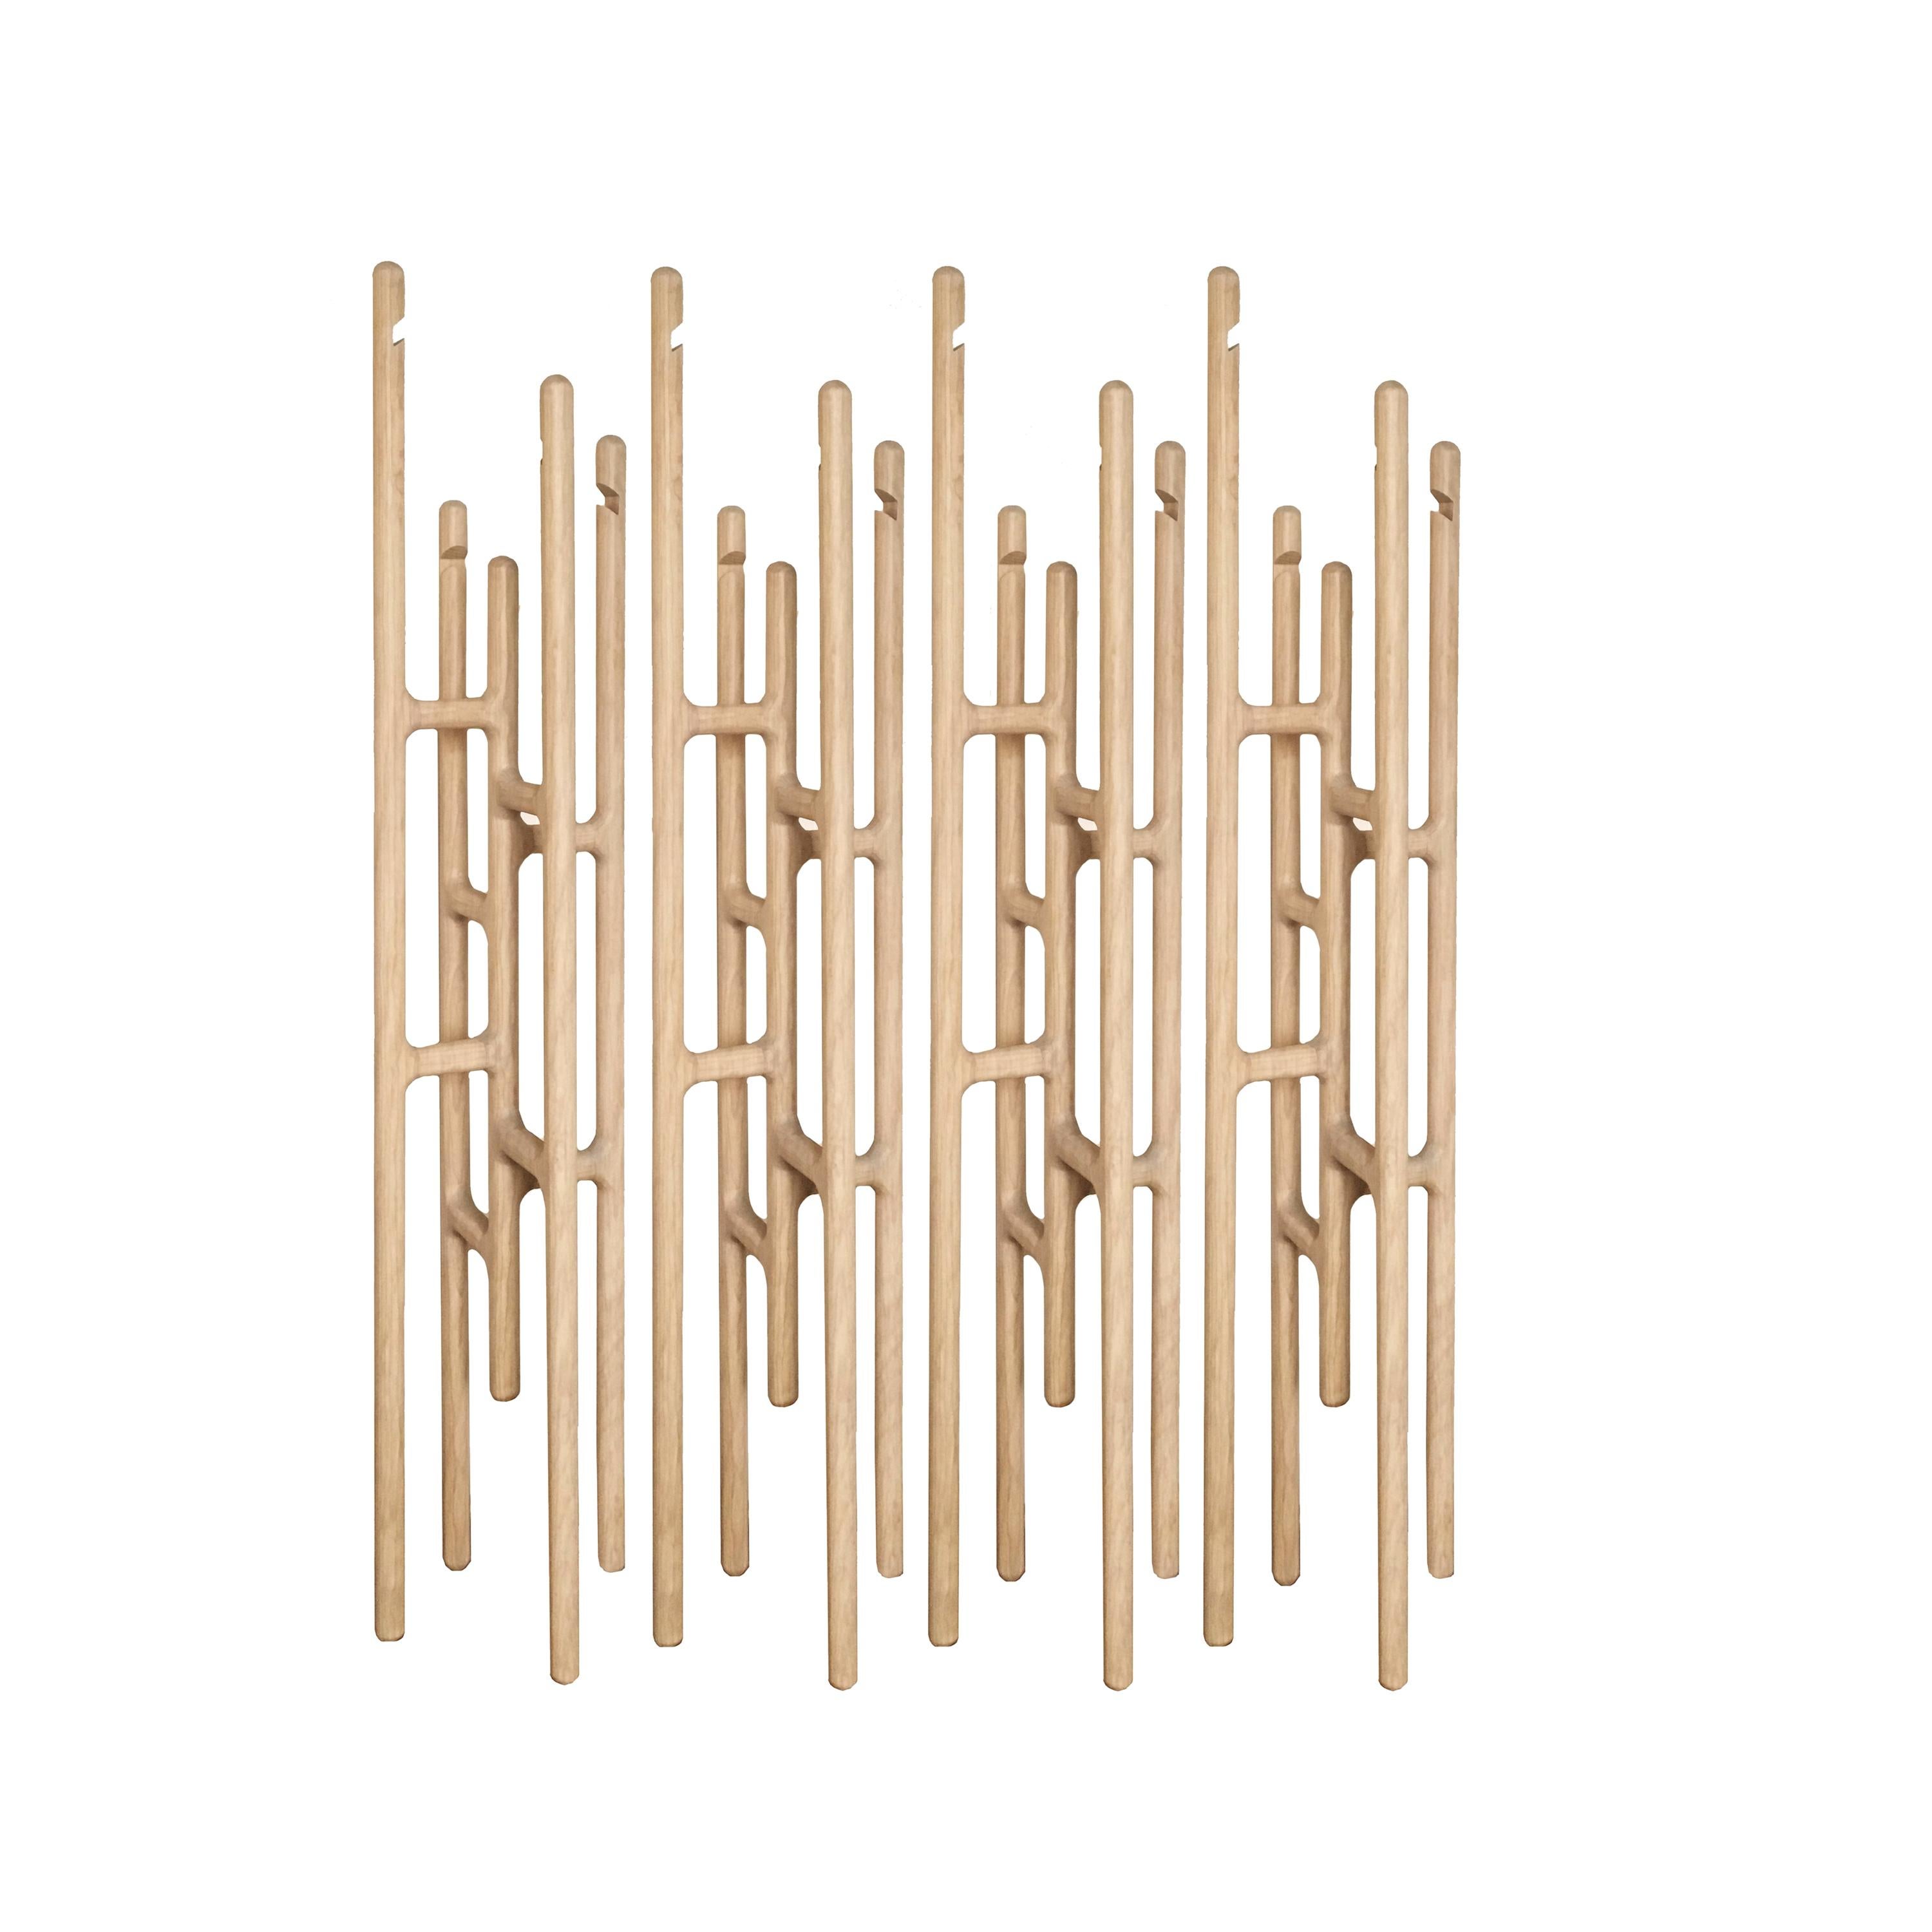 Stick Screen/Coat Rack  (Minimalist, Contemporary, Wood Sculptural object)